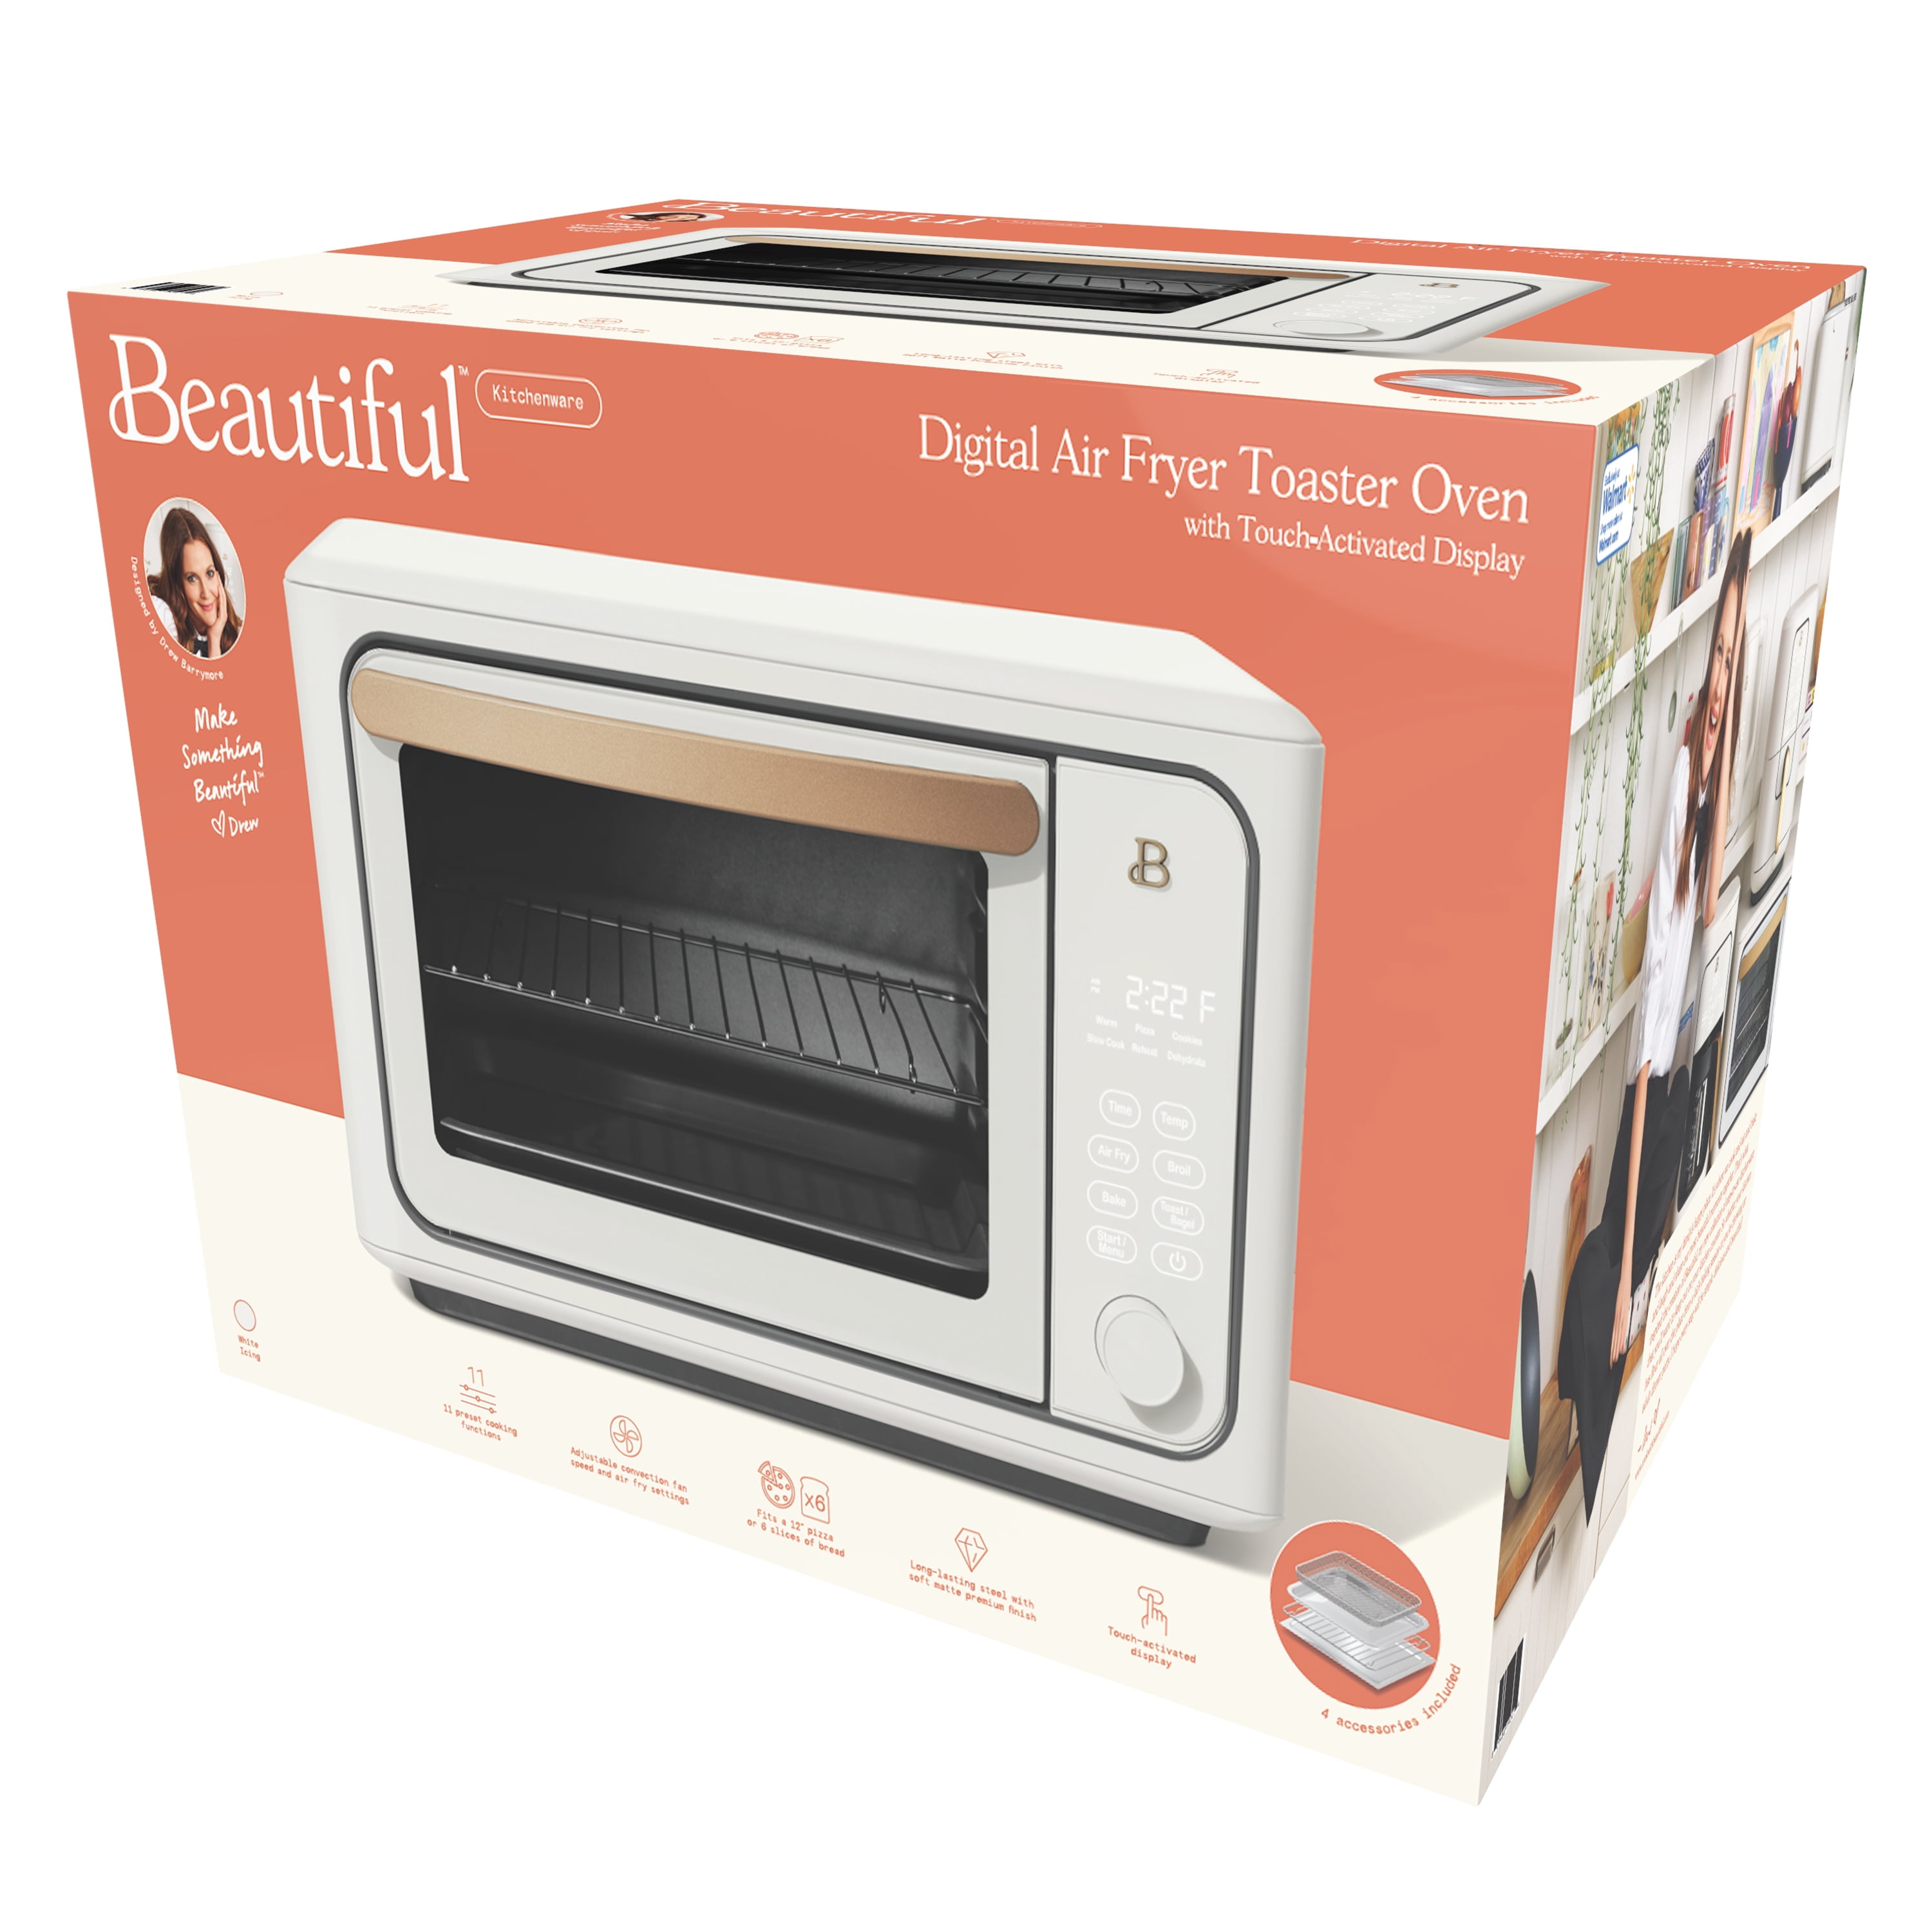 6 Quart Touchscreen Air Fryer, Black Sesame by Drew Barrymore - Bed Bath &  Beyond - 36496661